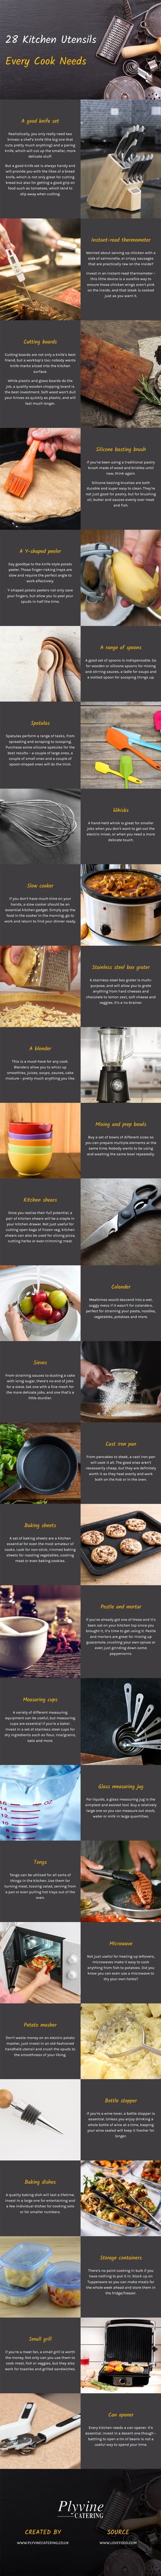 28 kitchen utensils every cook needs